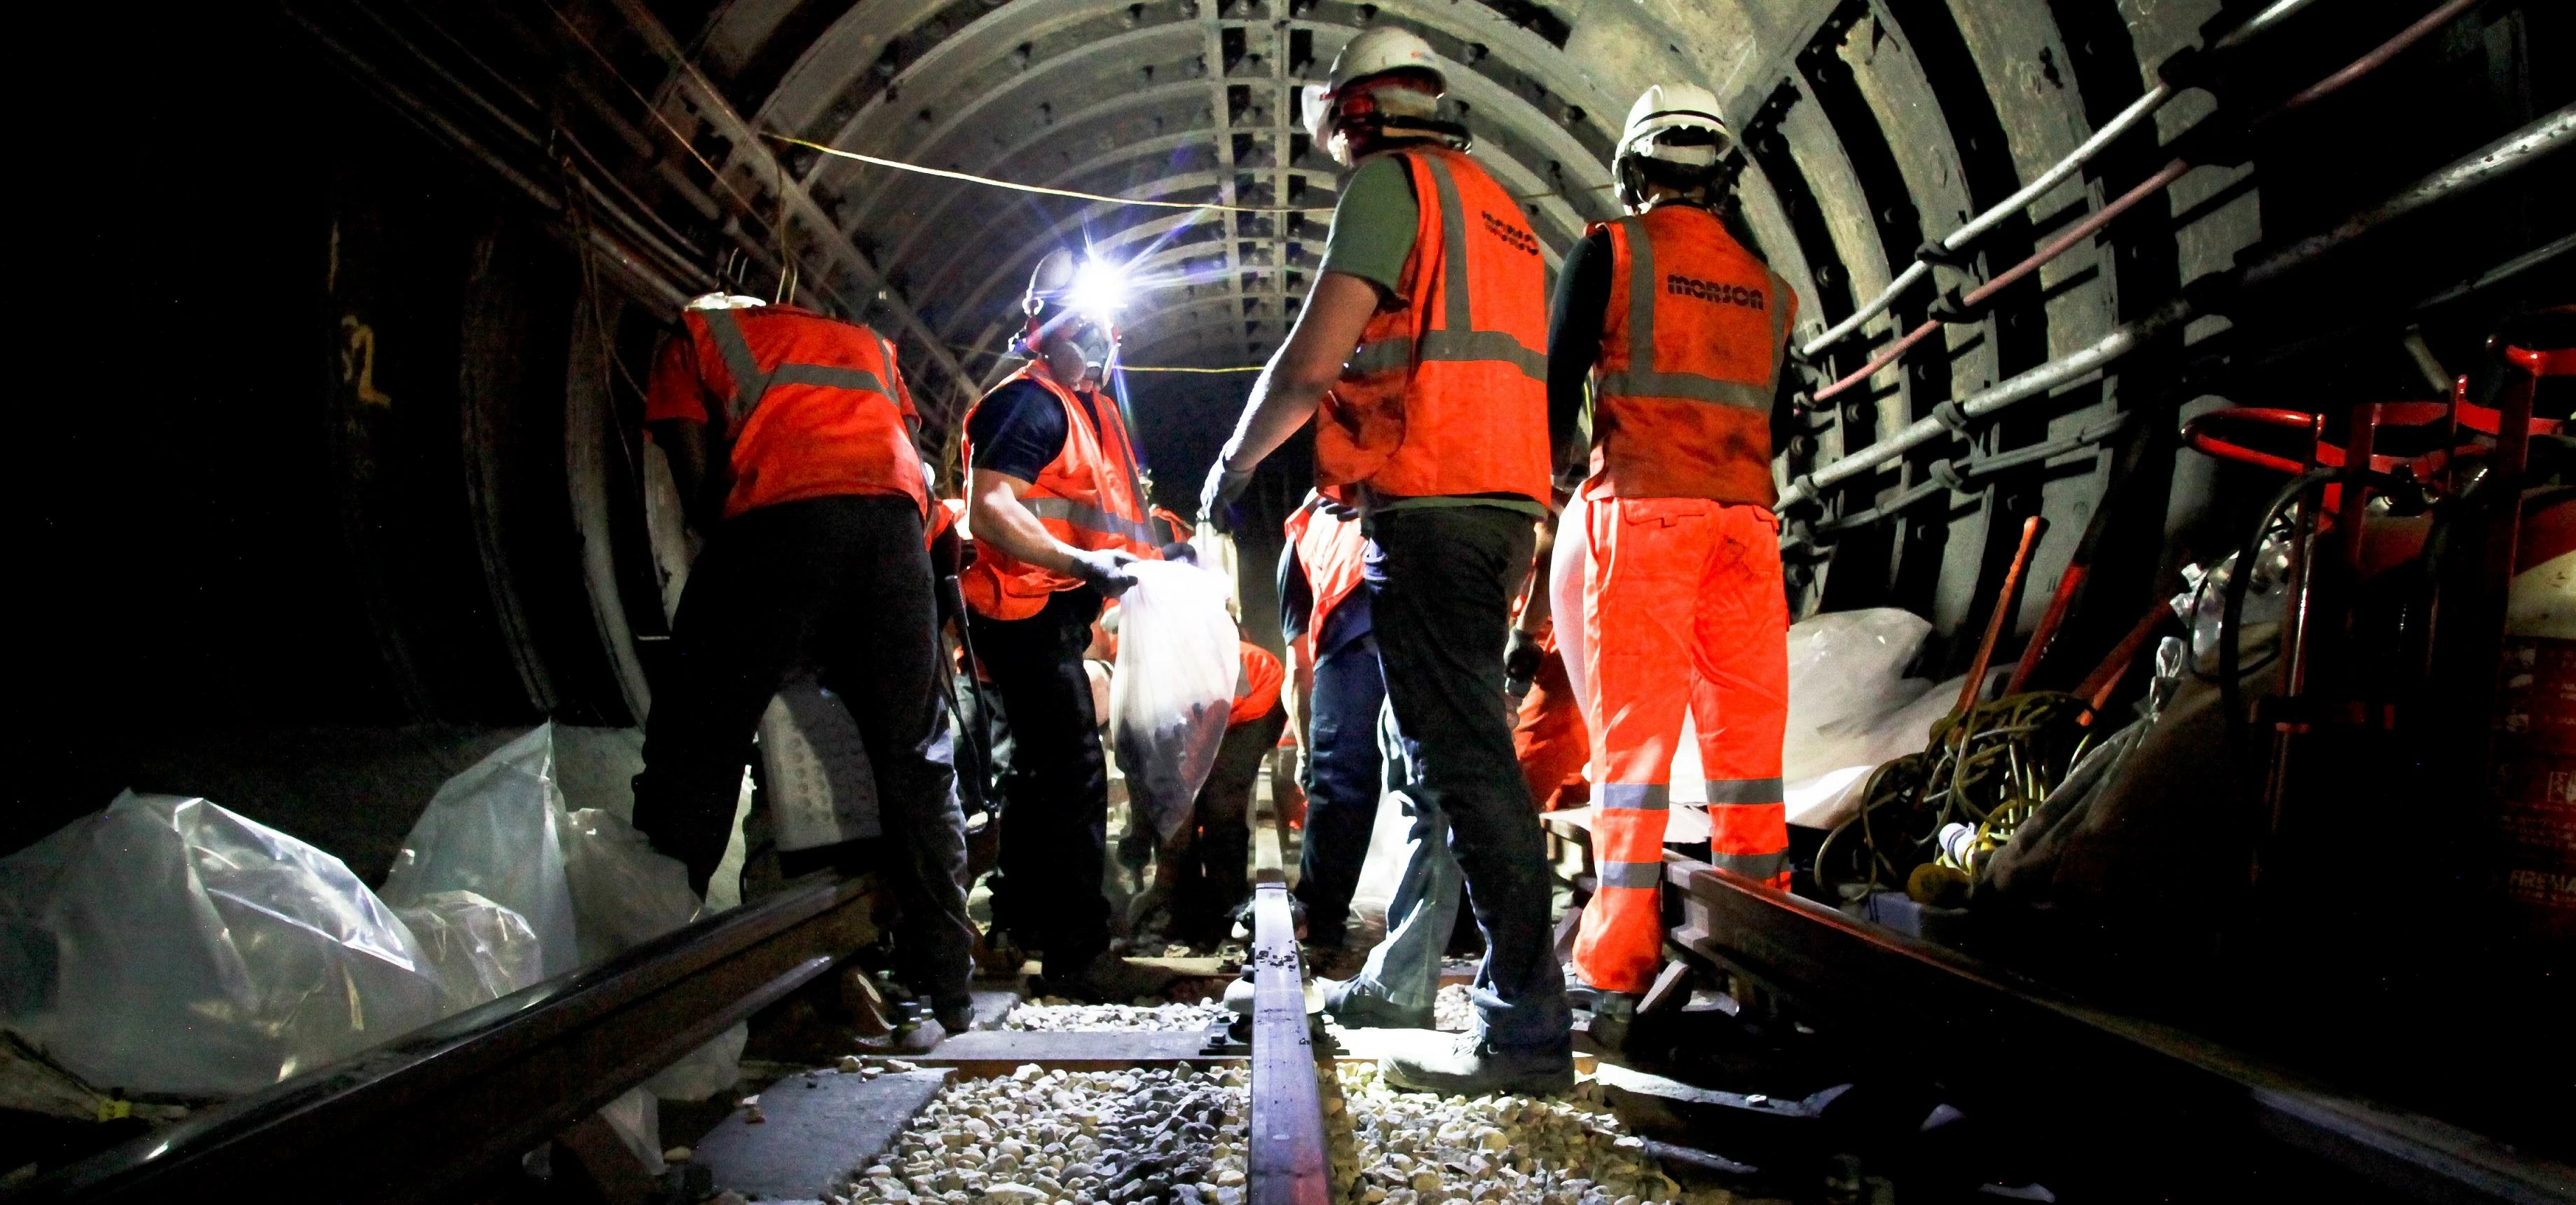 Morson International track workers on the London Underground